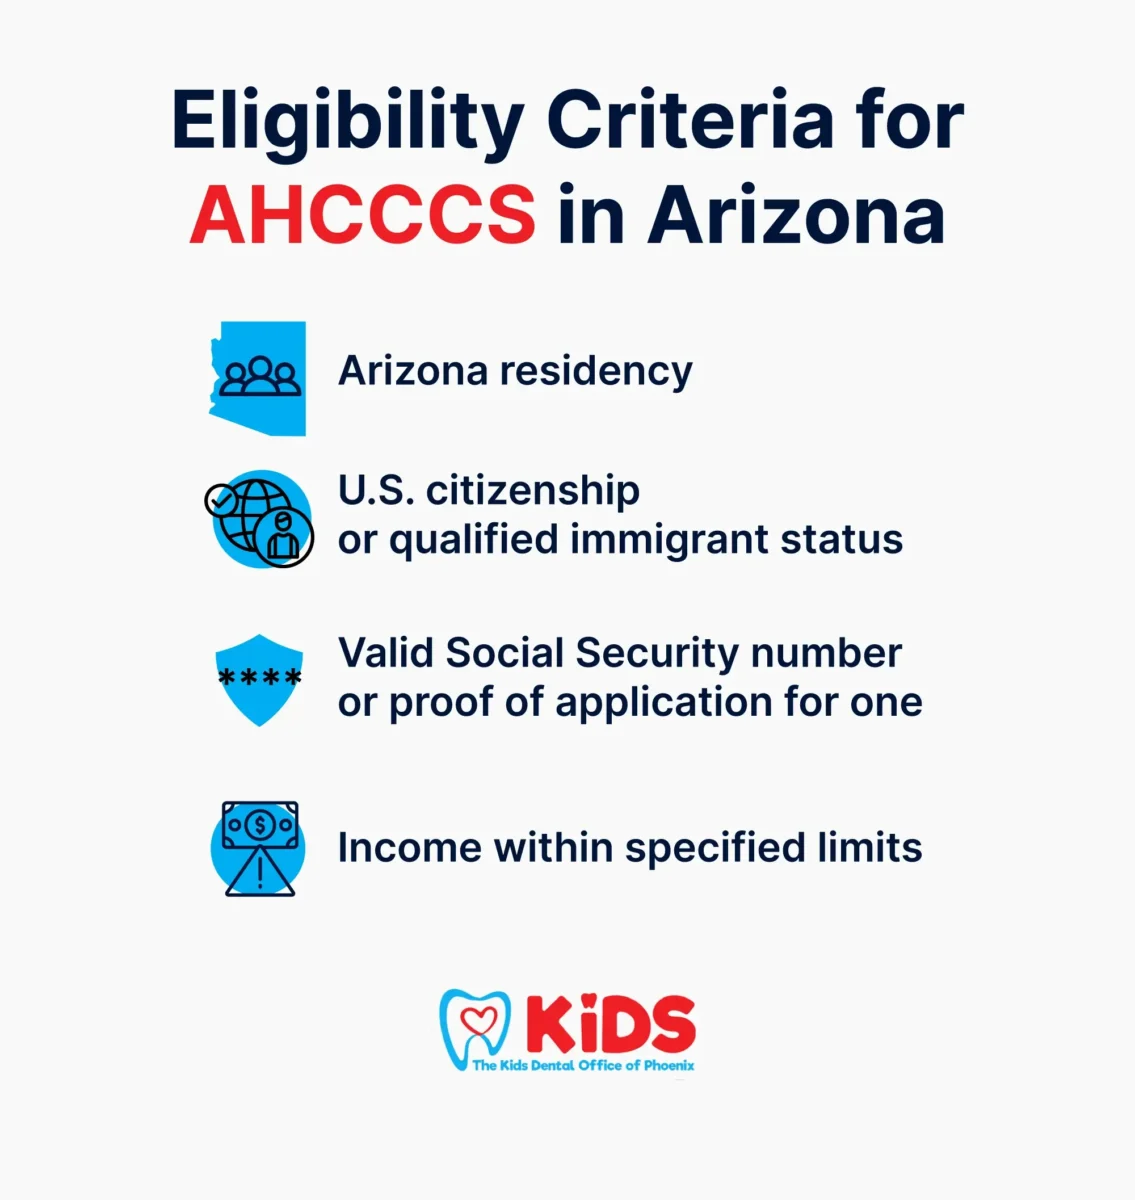 Eligibility criteria for AHCCCS.